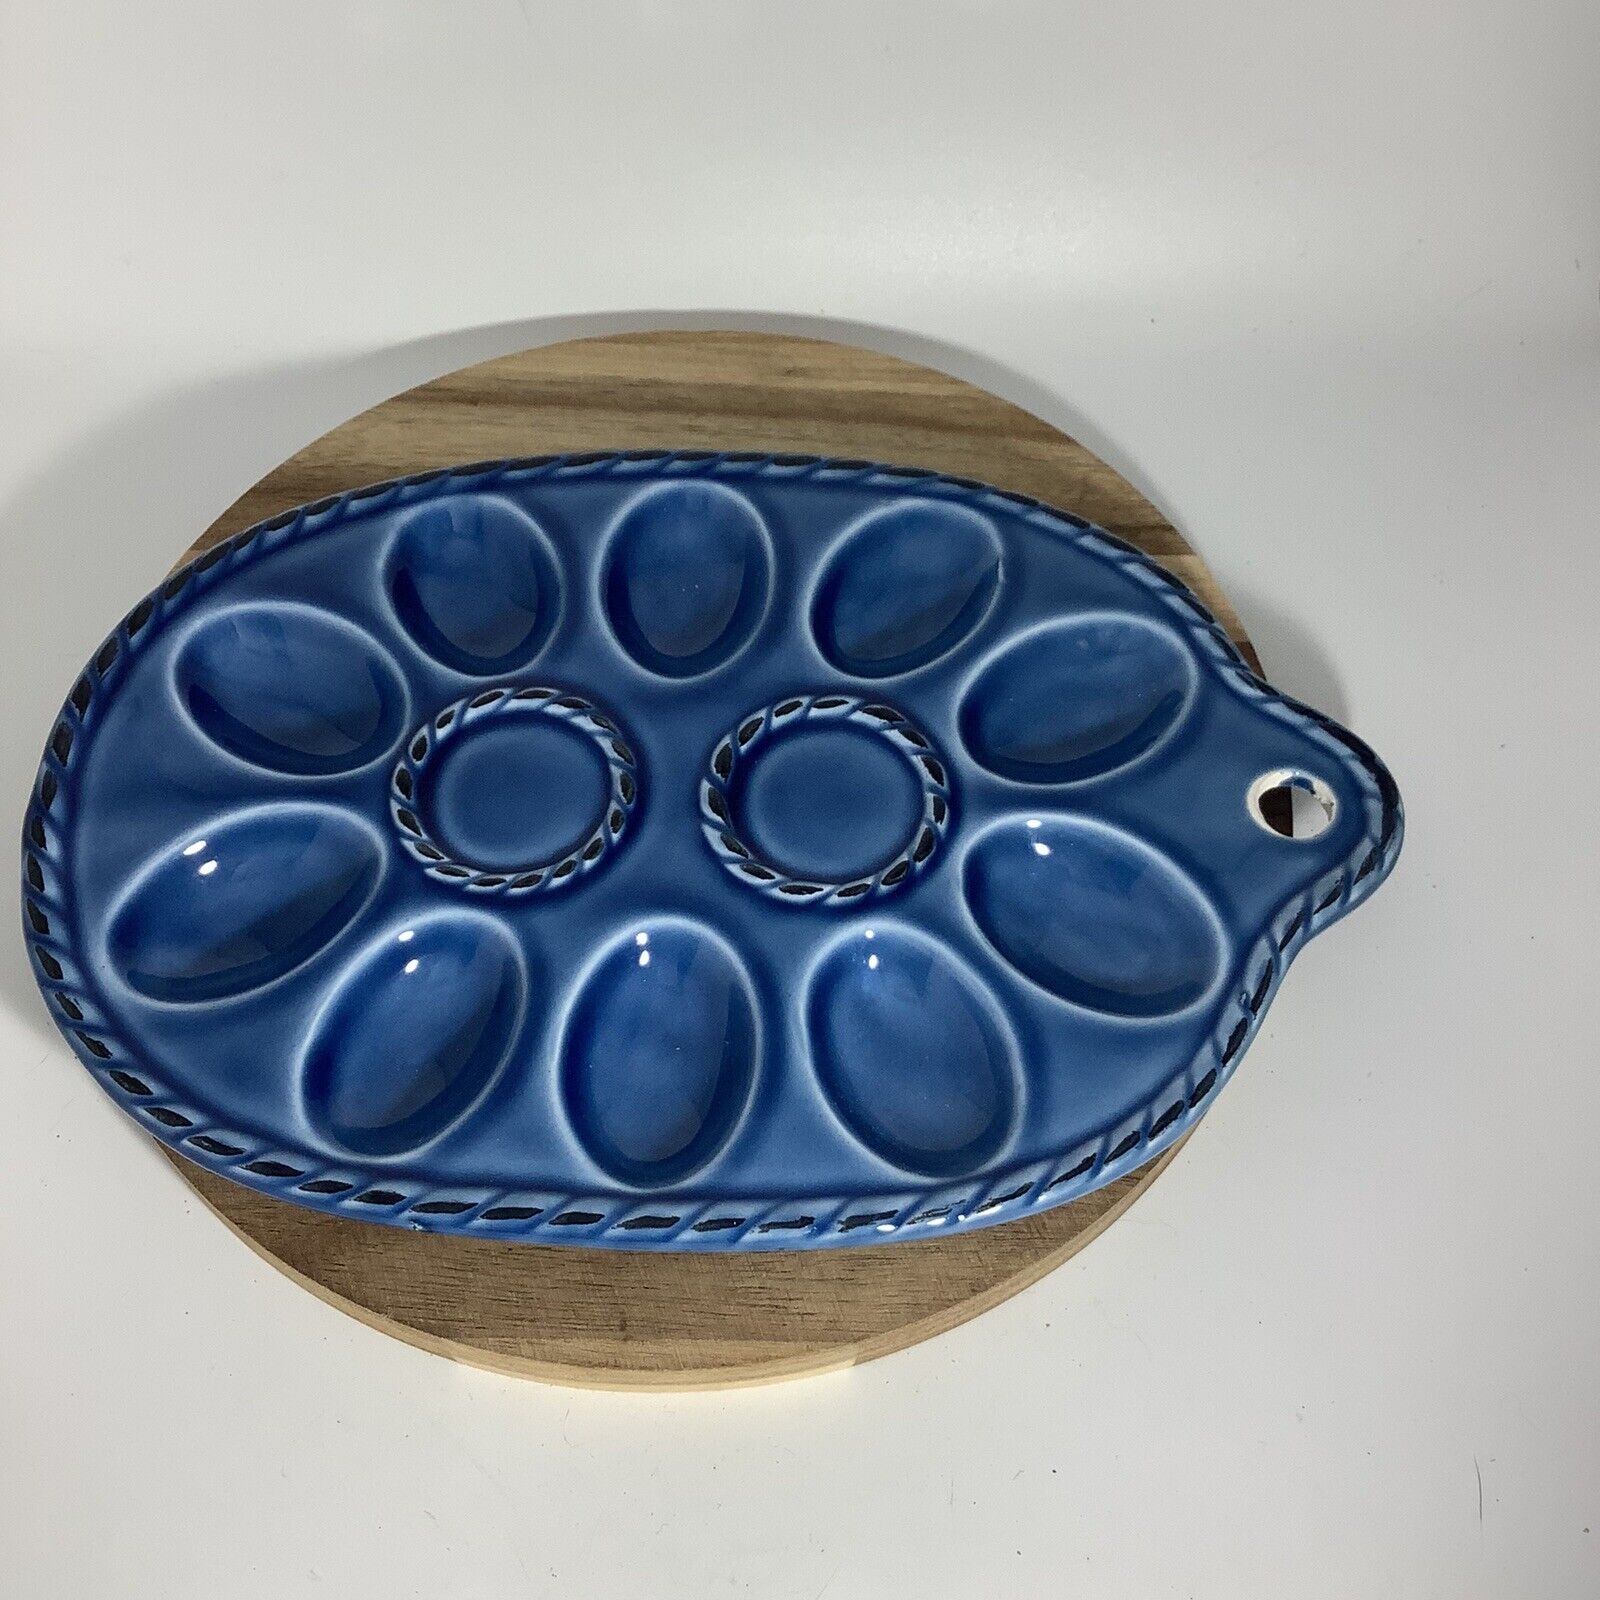 Vintage Blue Ceramic Deviled Egg Tray 10”x6.5” Japan Holds 10 Eggs